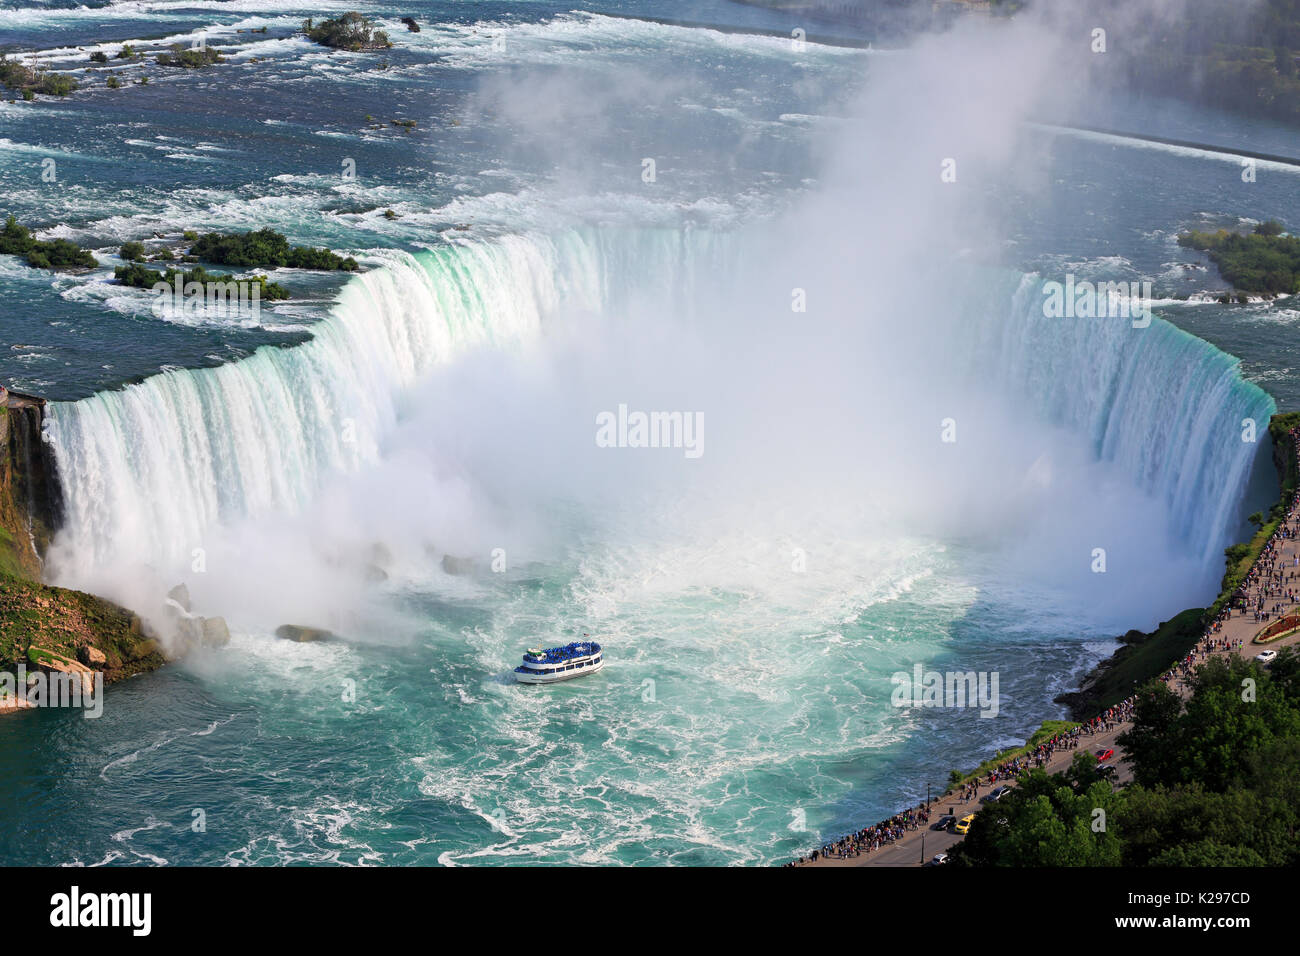 Cascate del Niagara, vista aerea, Canada Foto Stock